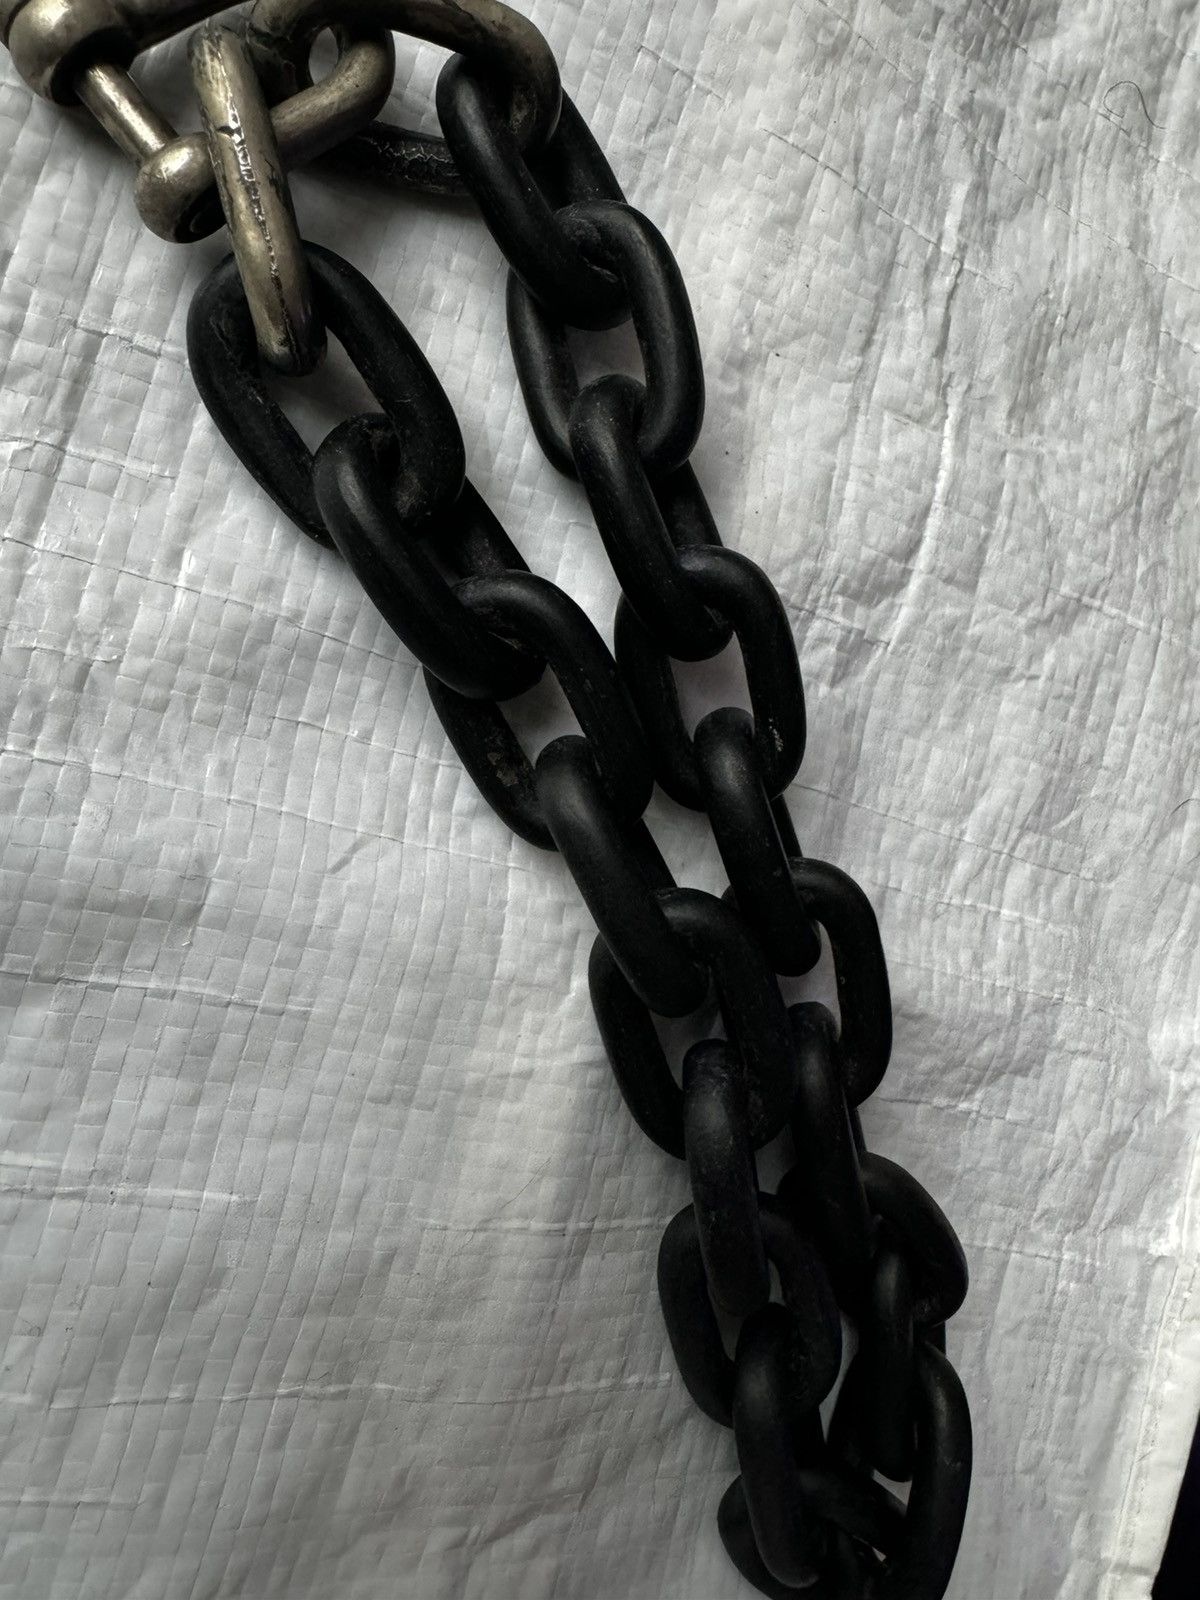 Charm Chain Choker Black Wood Small Links - 6